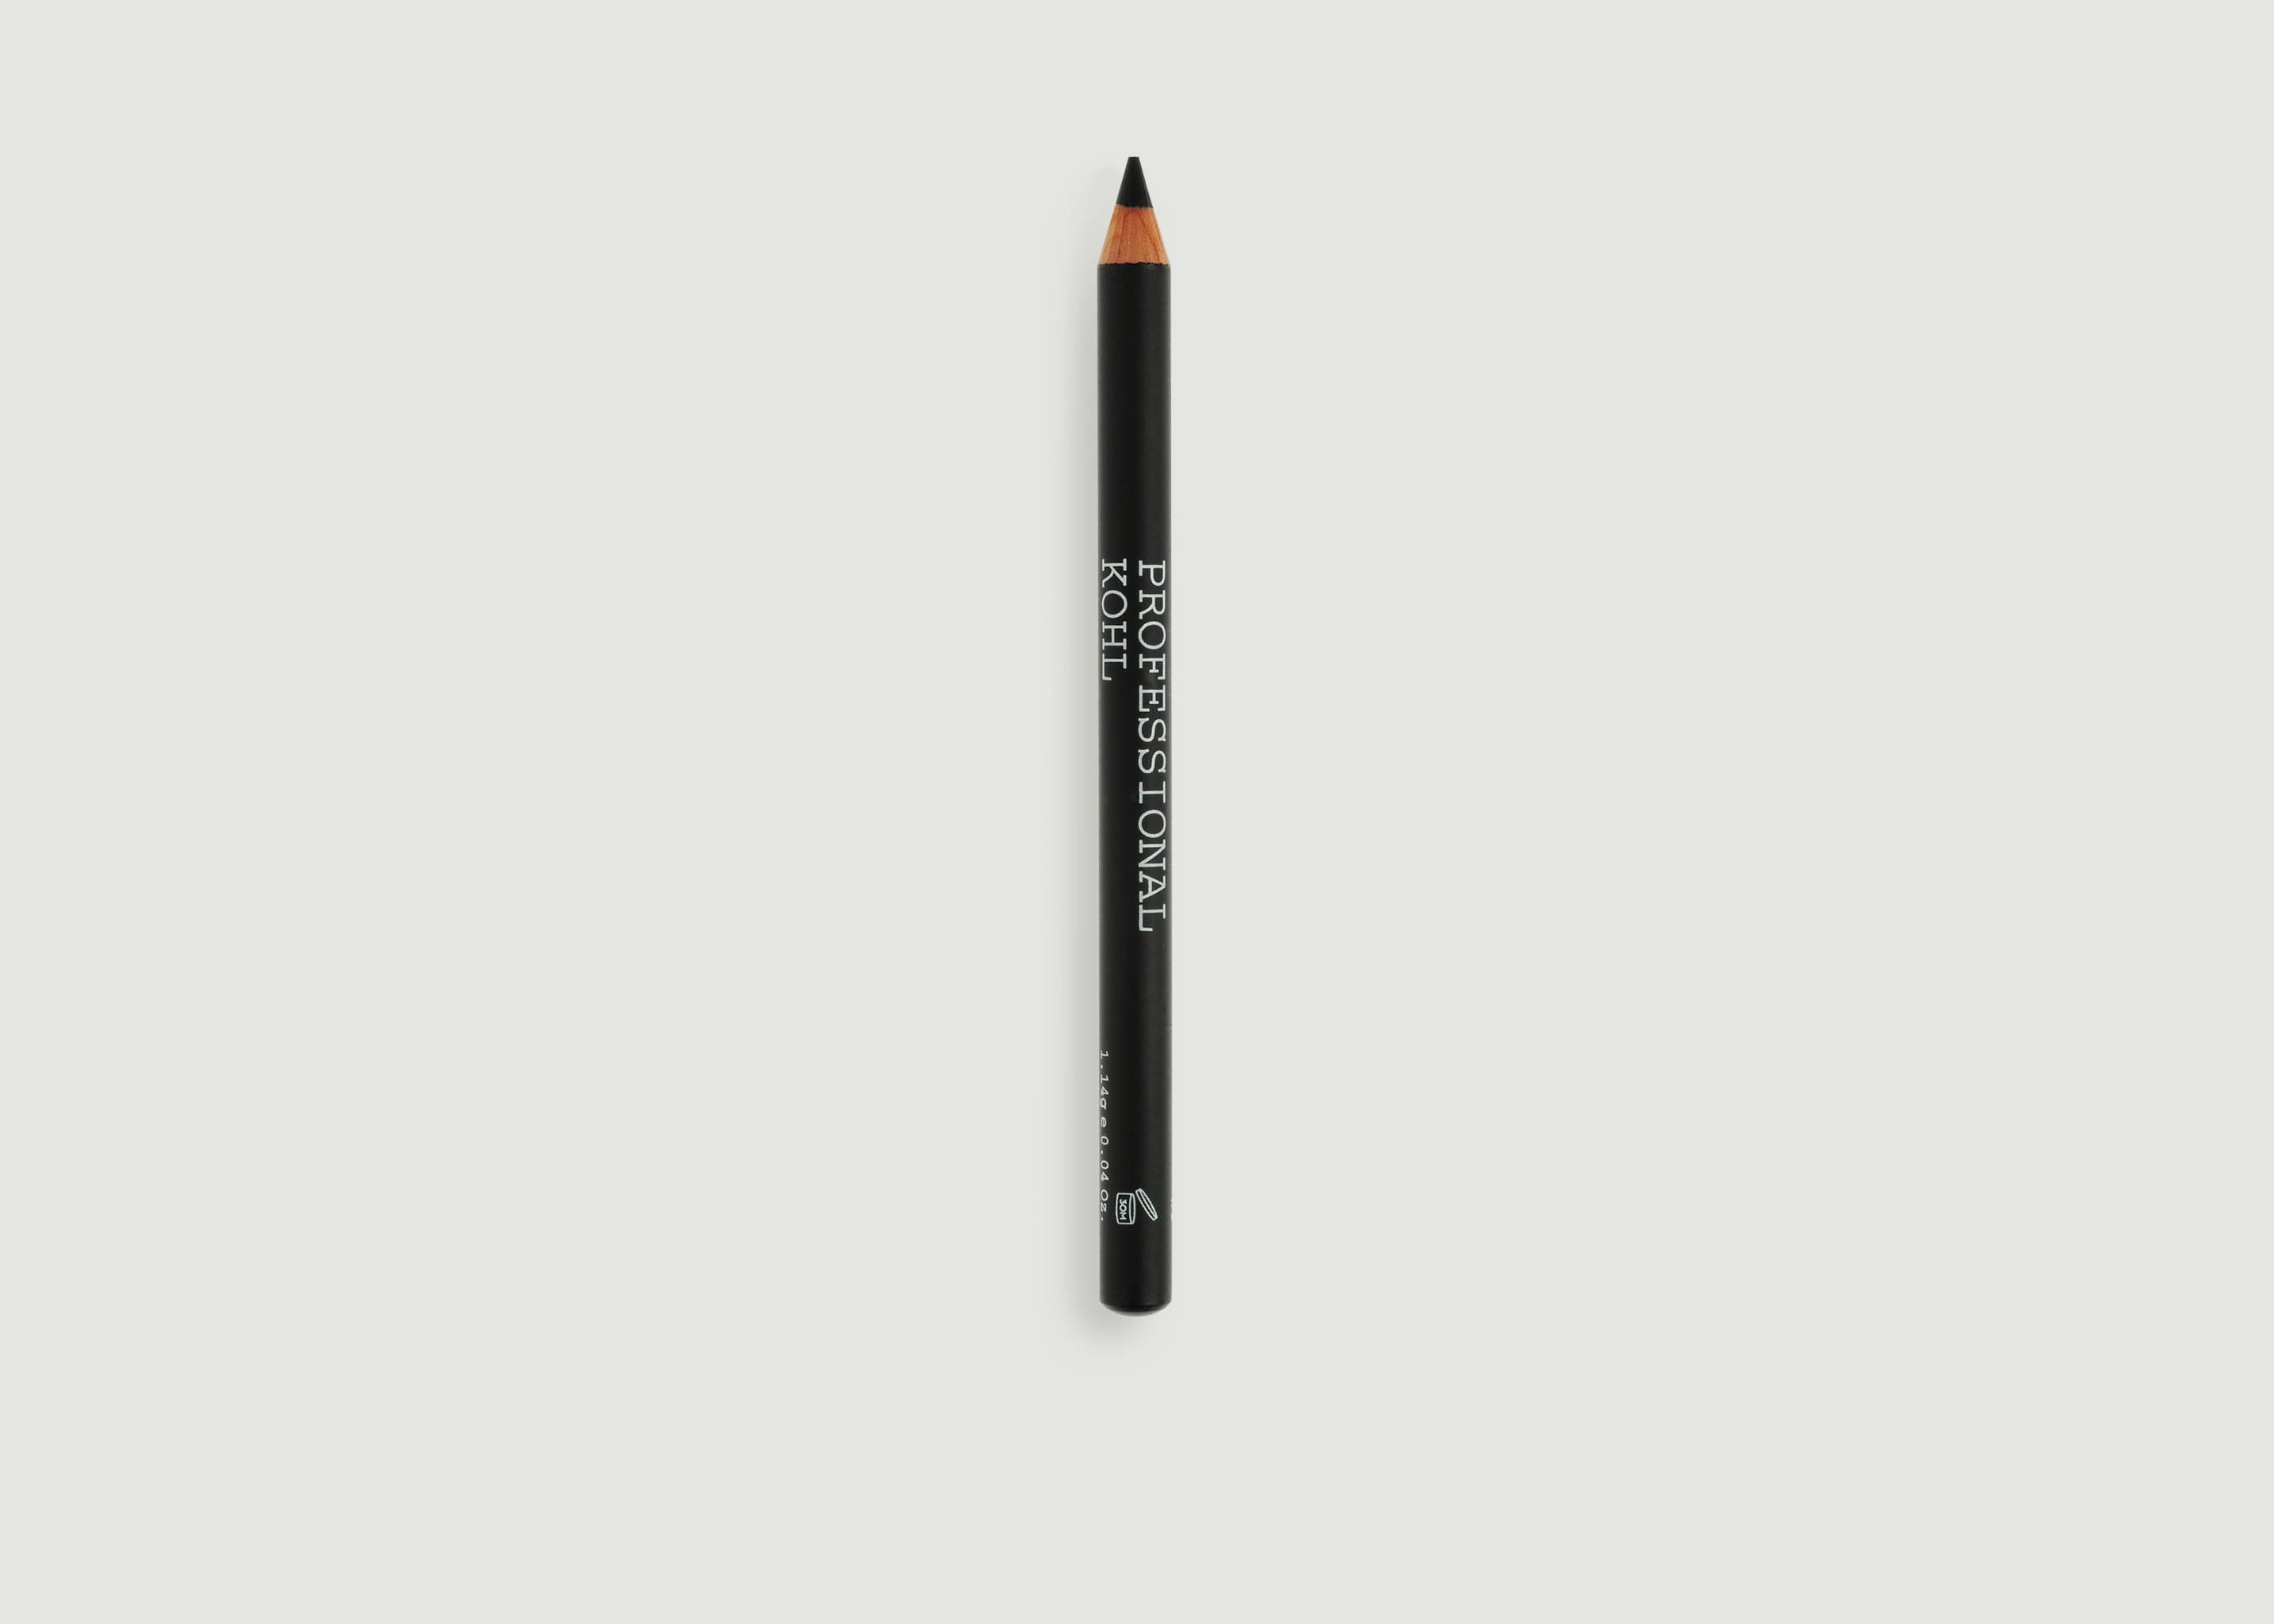 Kohl pencil - Korres